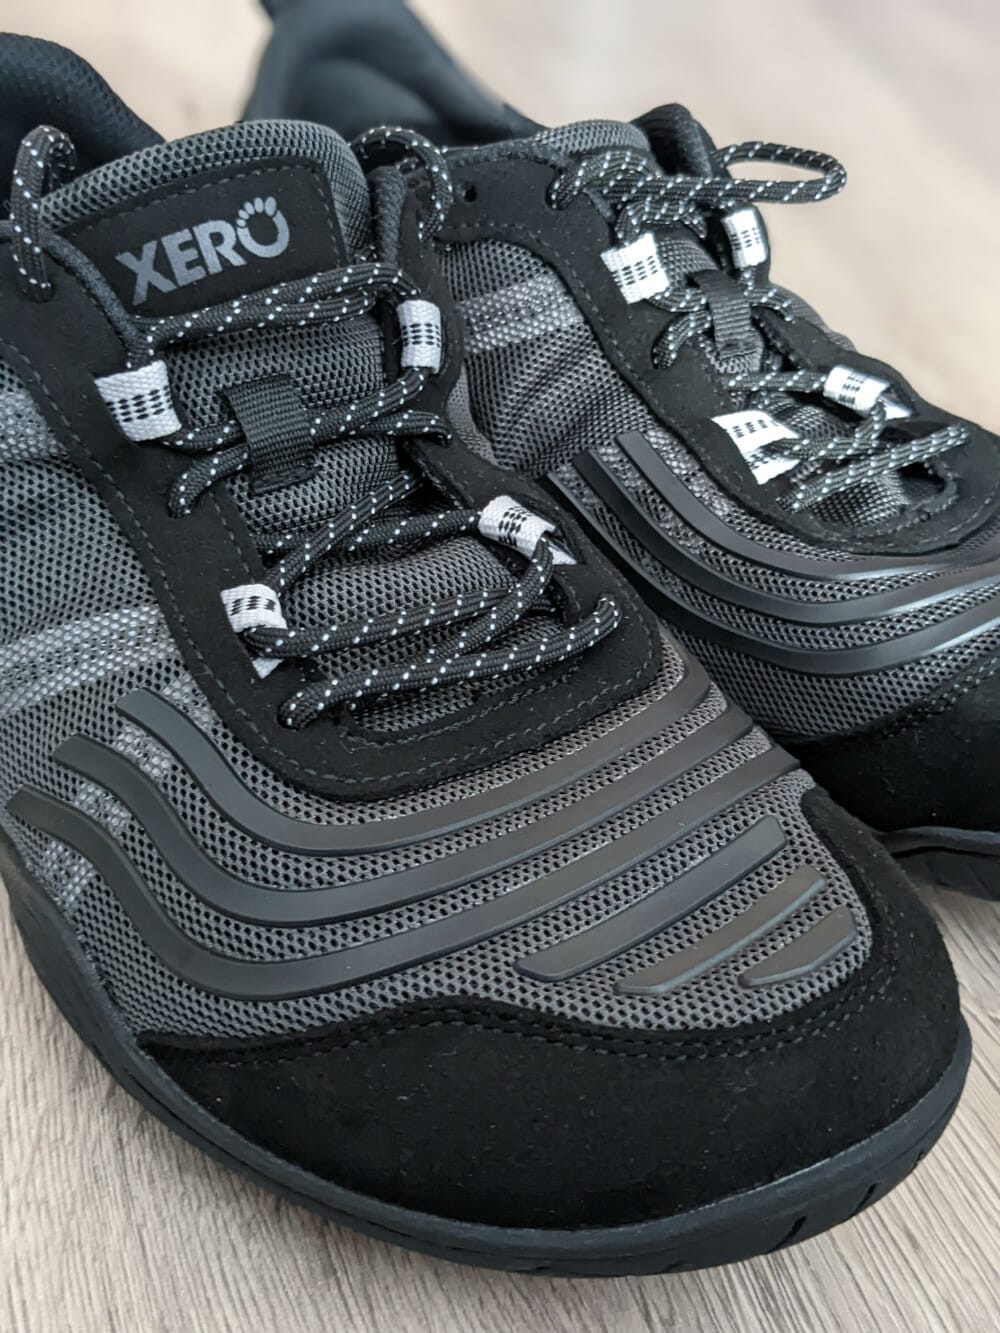 pair of xero 360 barefoot shoes